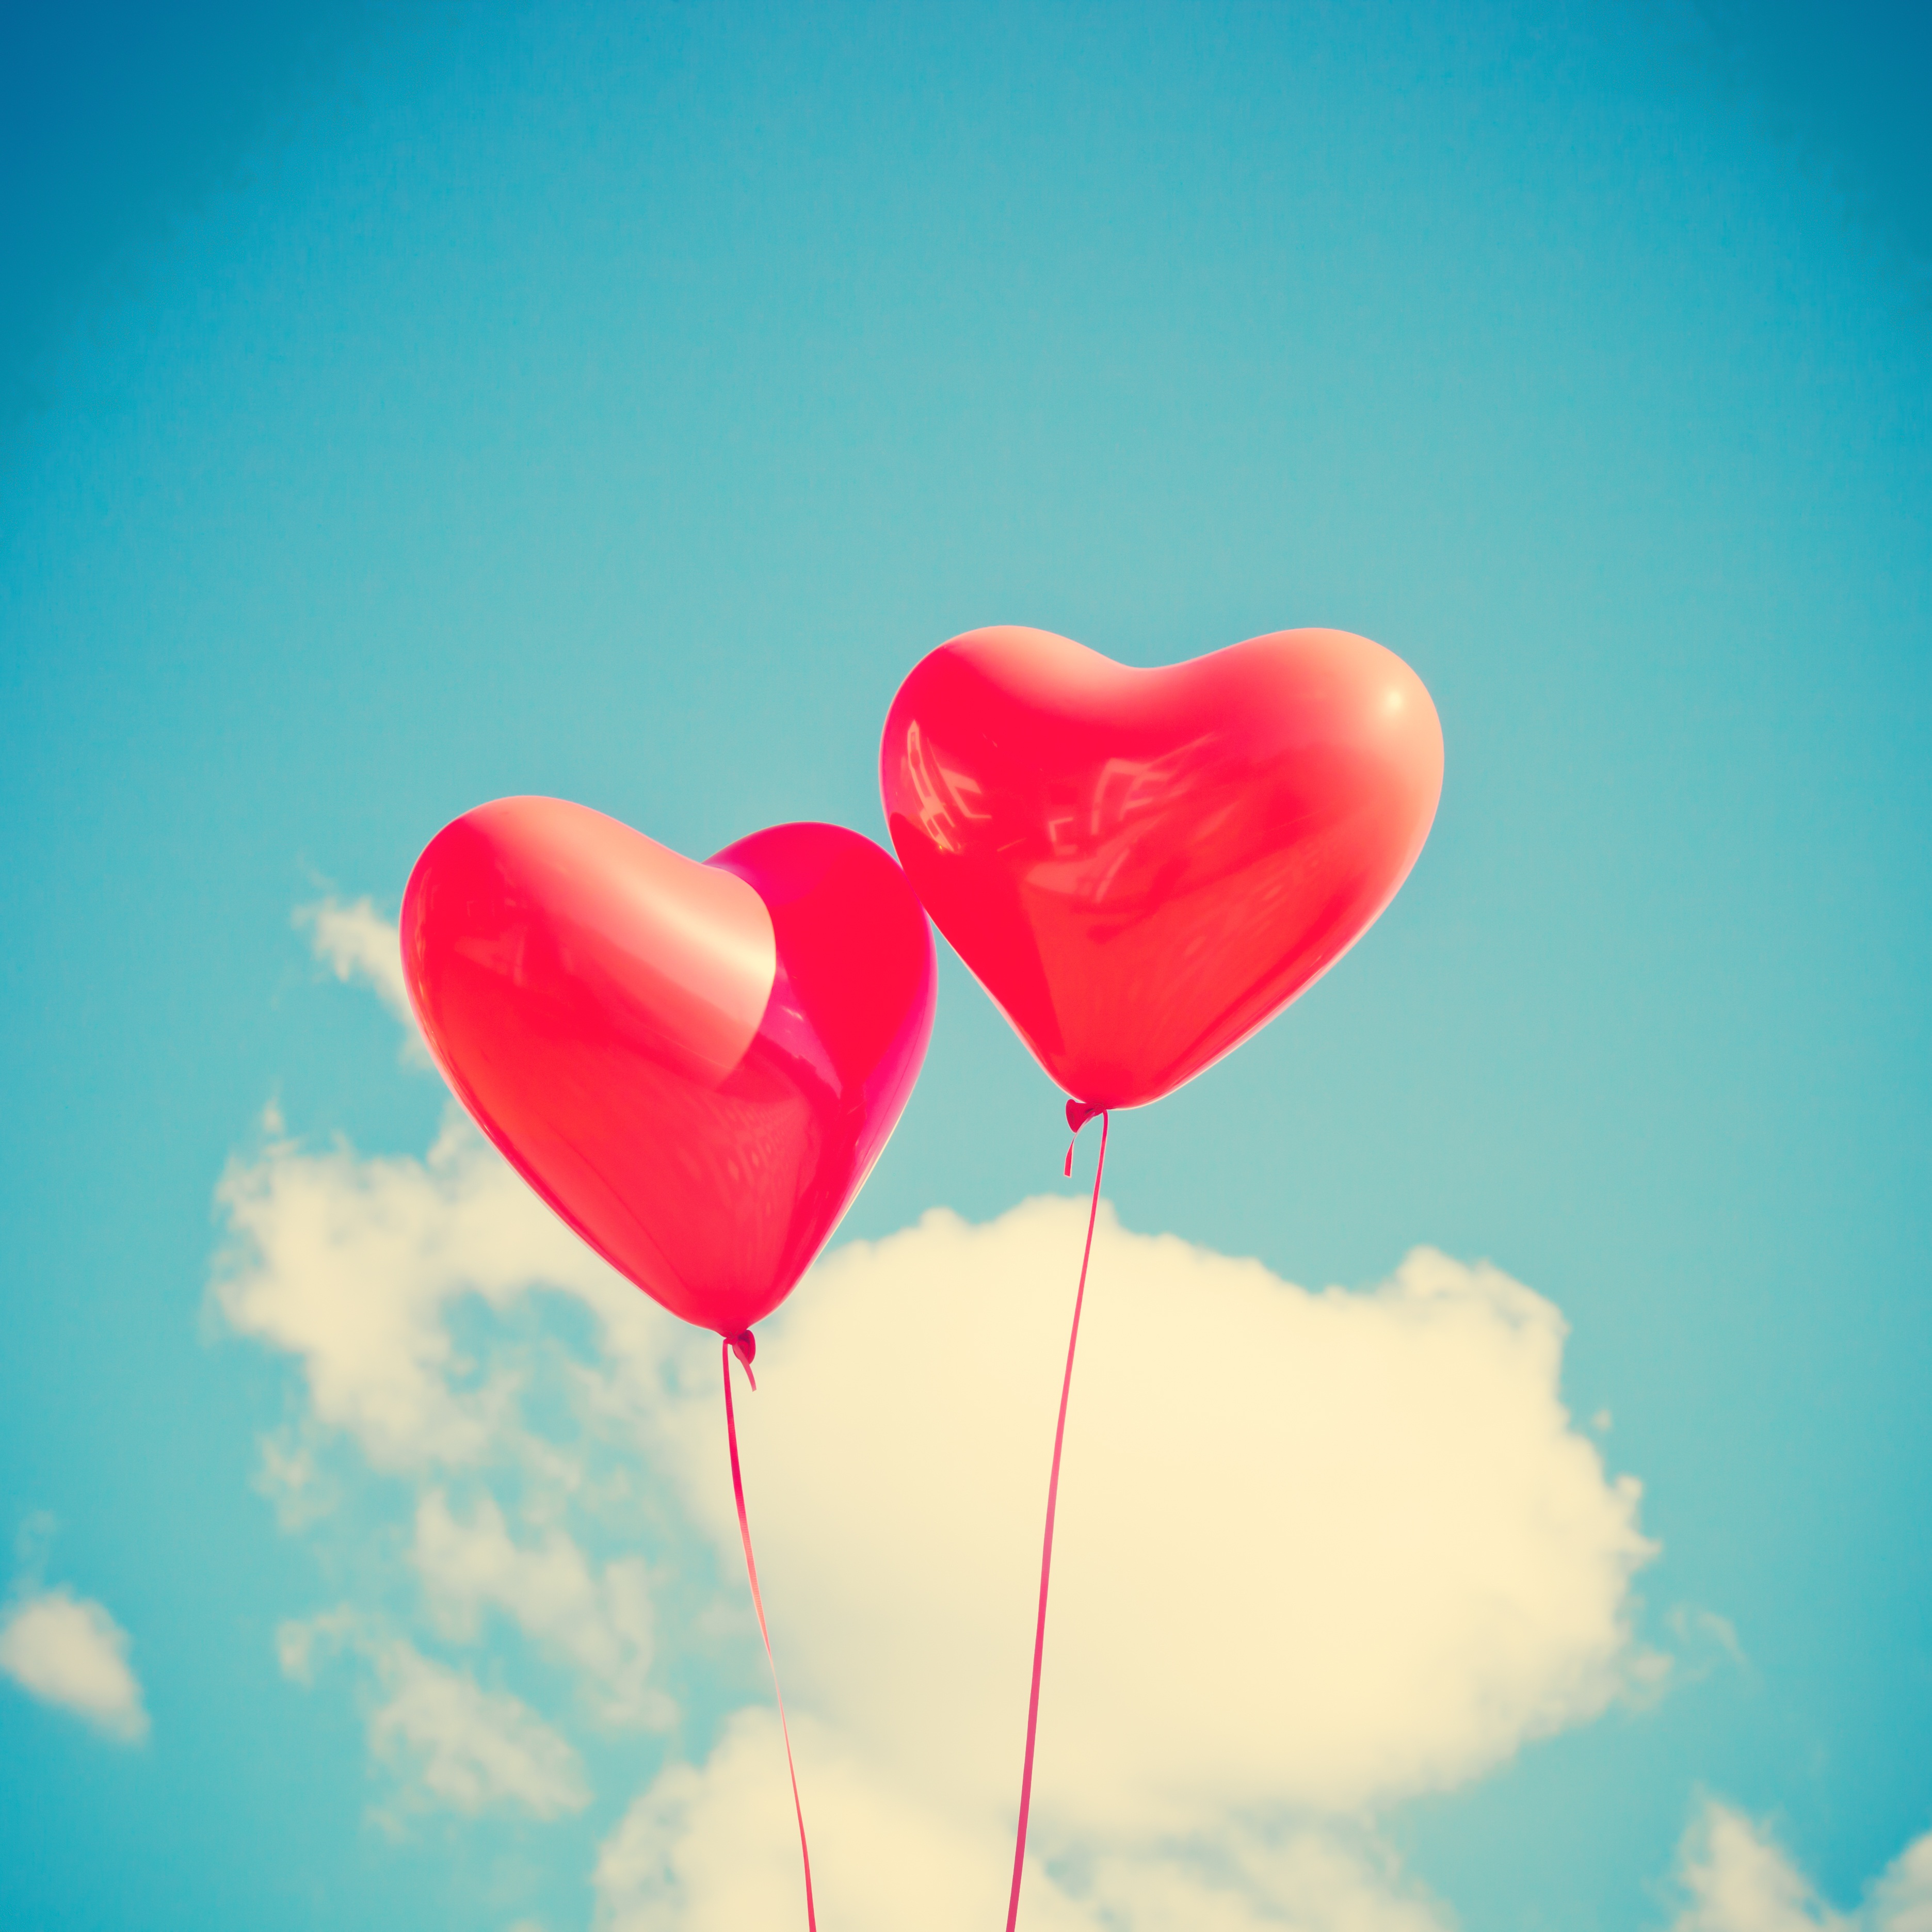 heart, balloons, love, sky, ease 2160p